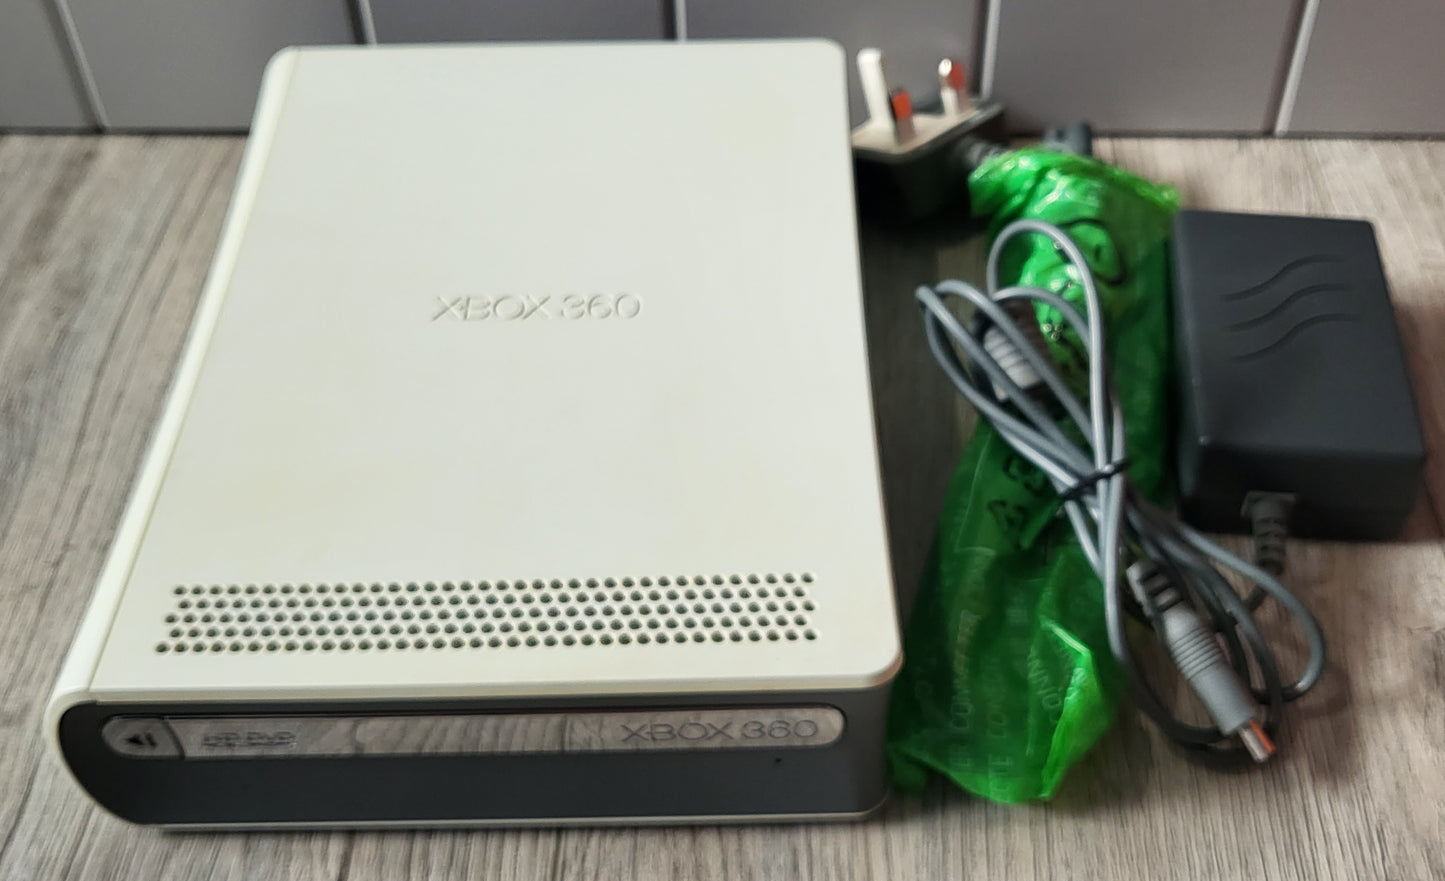 Boxed HD DVD Player Microsoft Xbox 360 Accessory